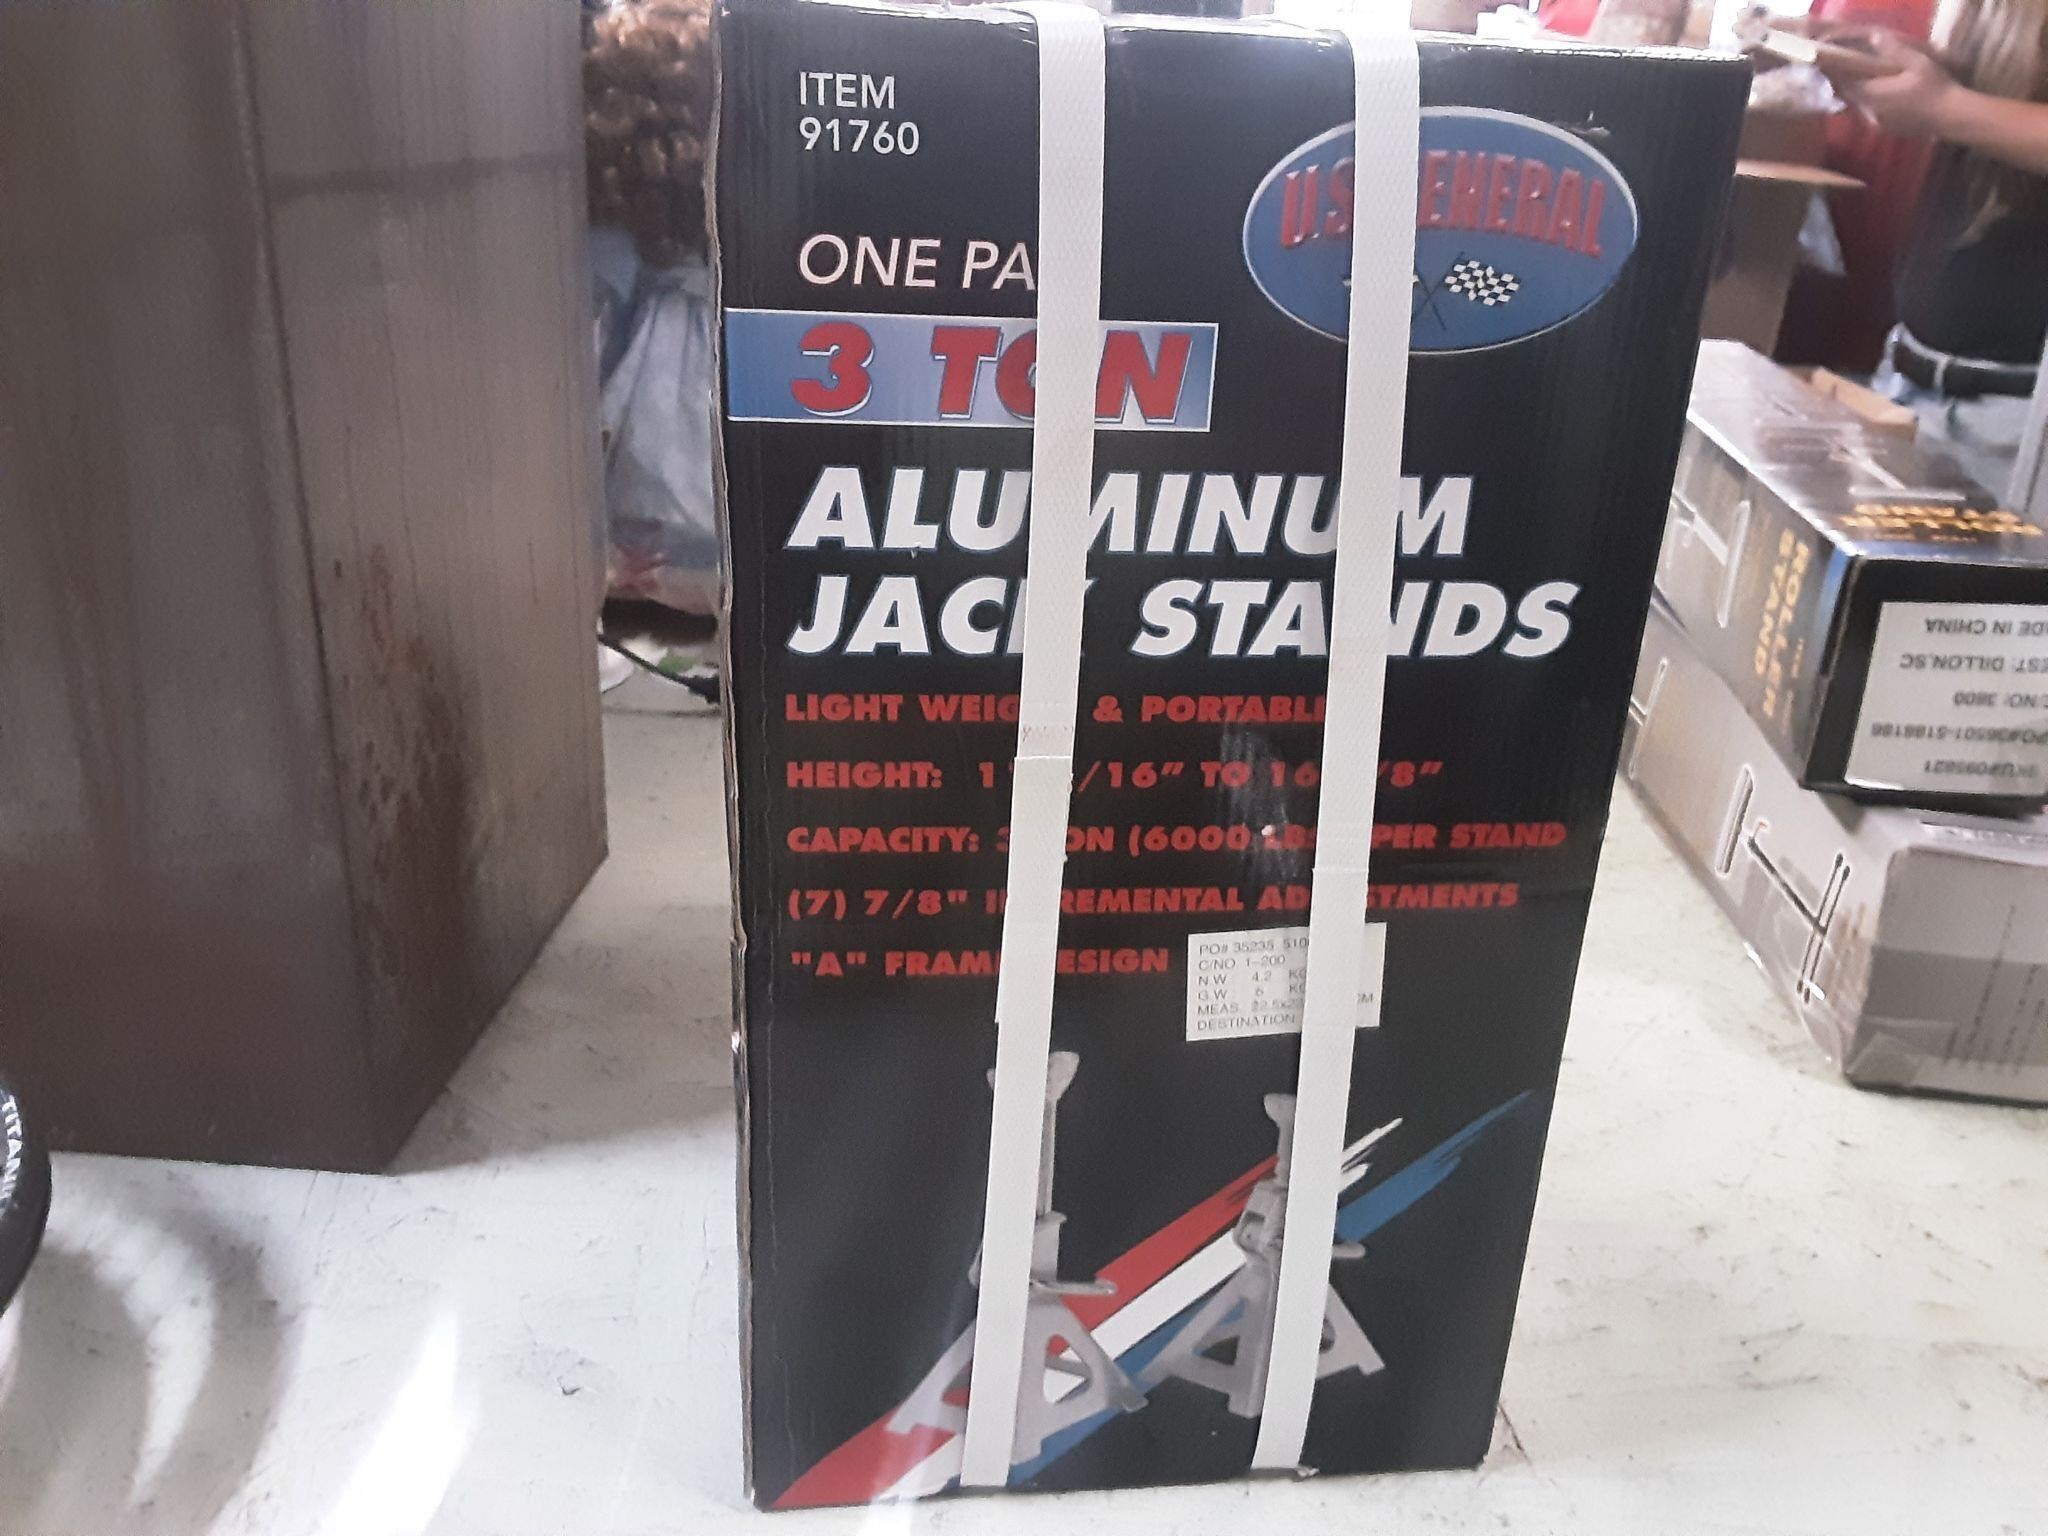 New 3 ton aluminum jack stands